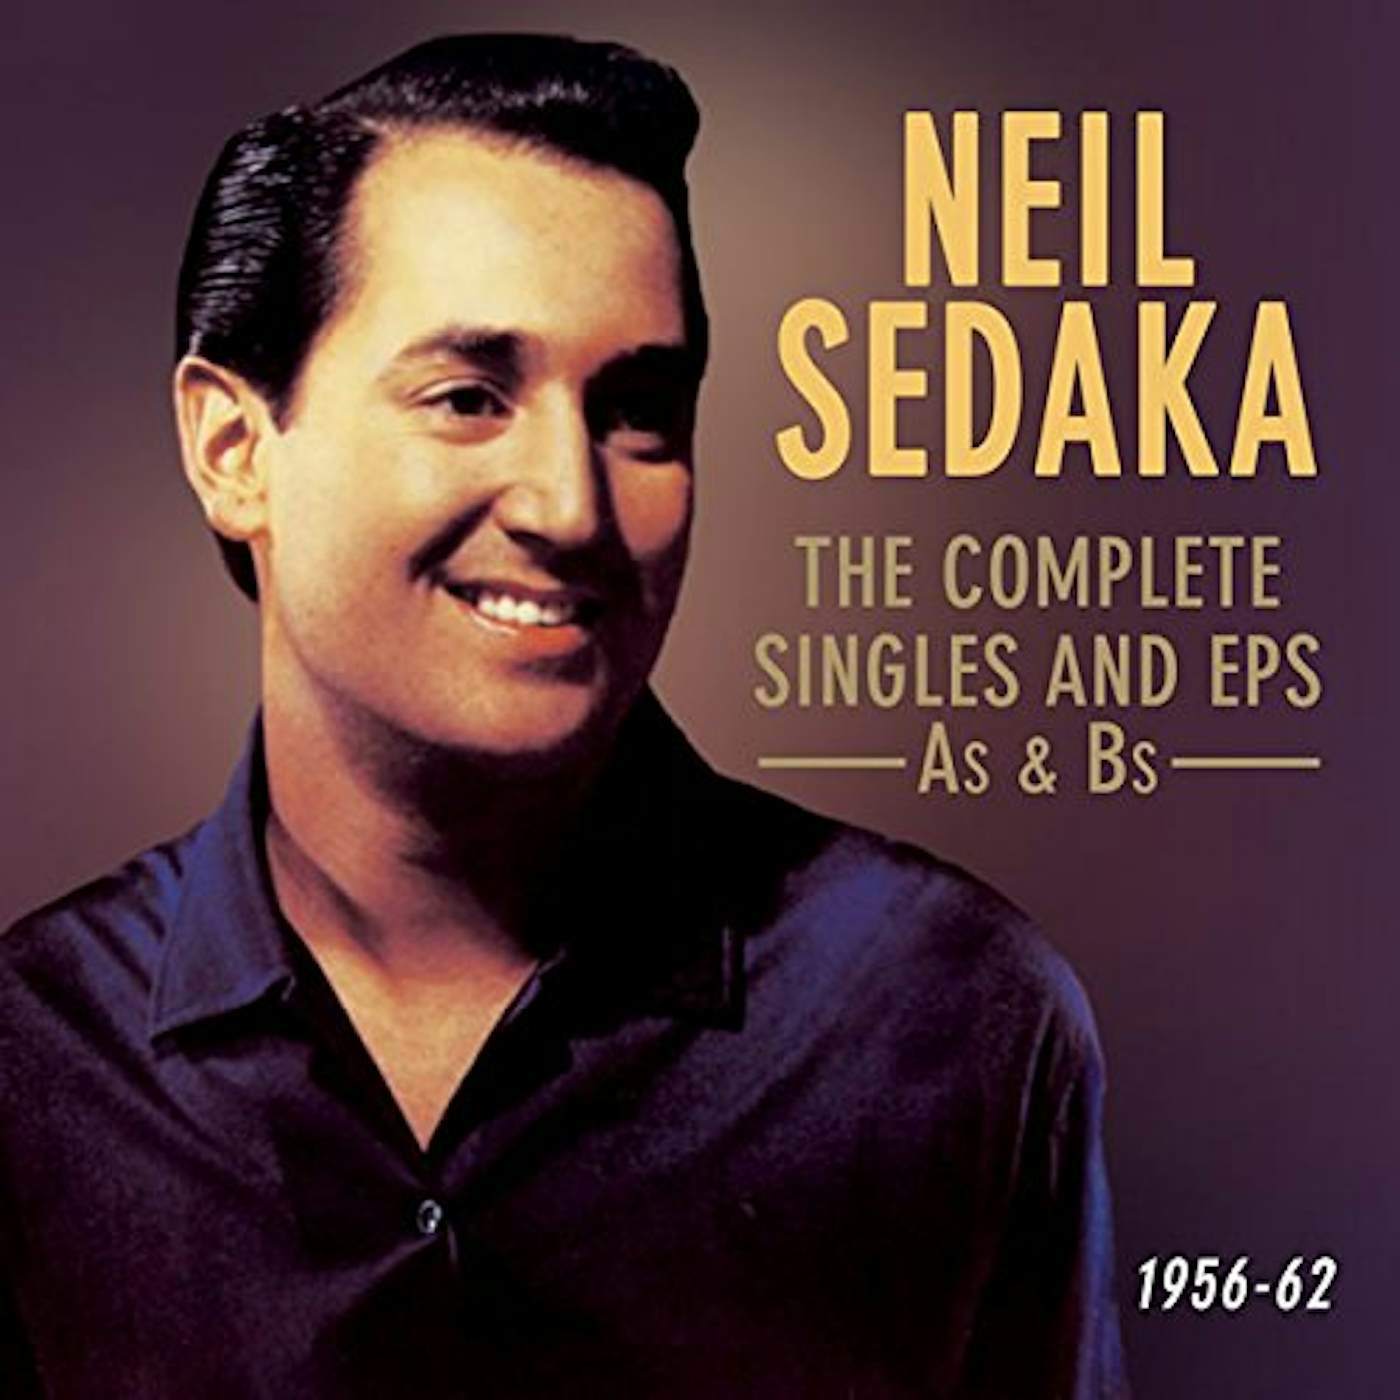 Neil Sedaka COMPLETE US SINGLES & EPS AS & BS 1956-62 CD